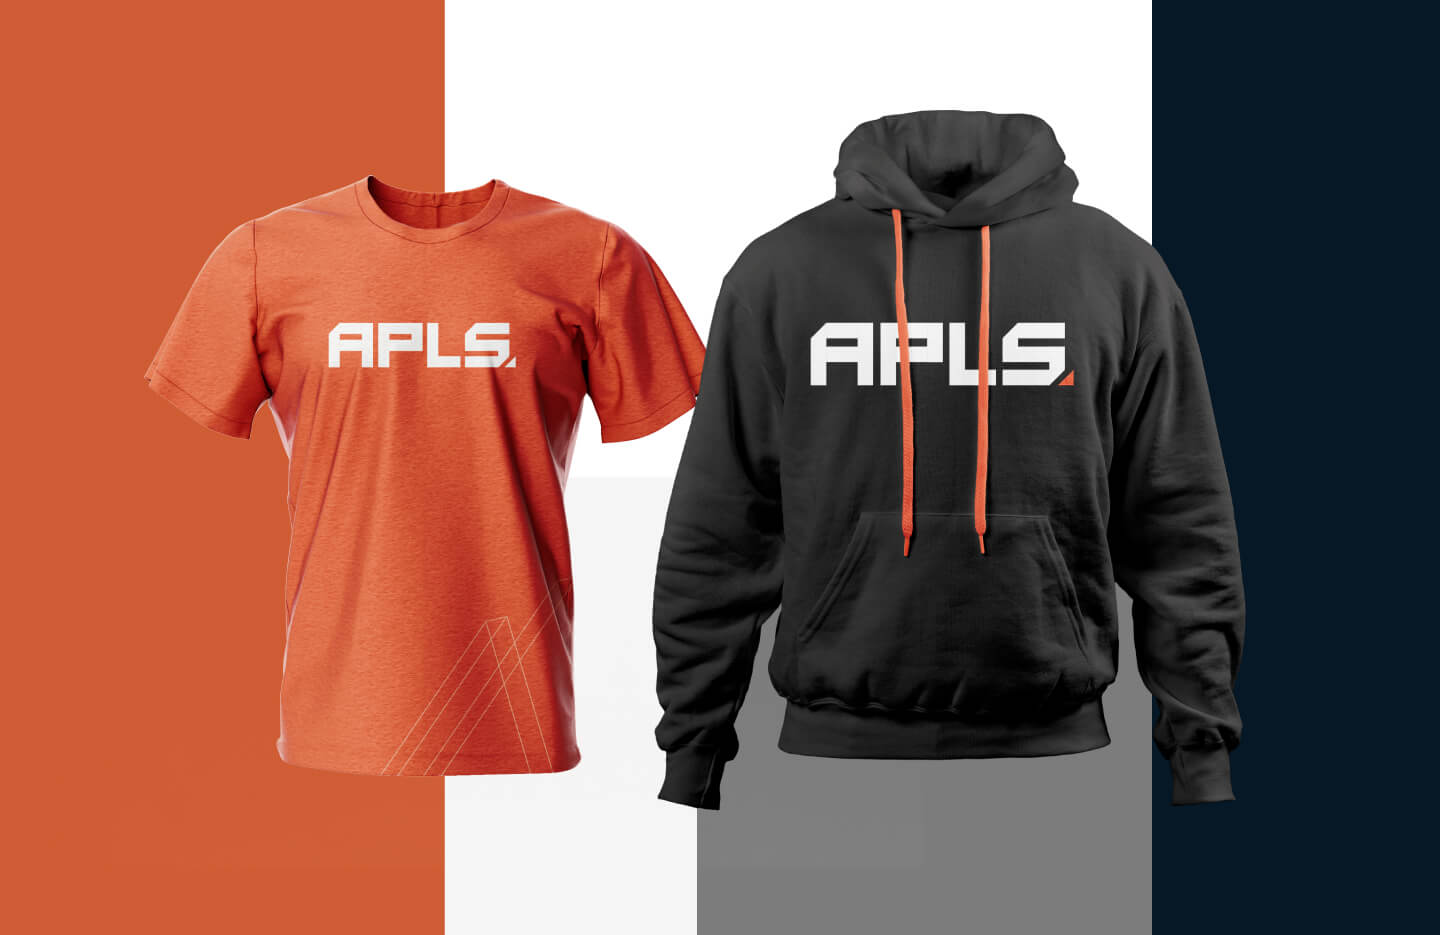 APLS Shirts